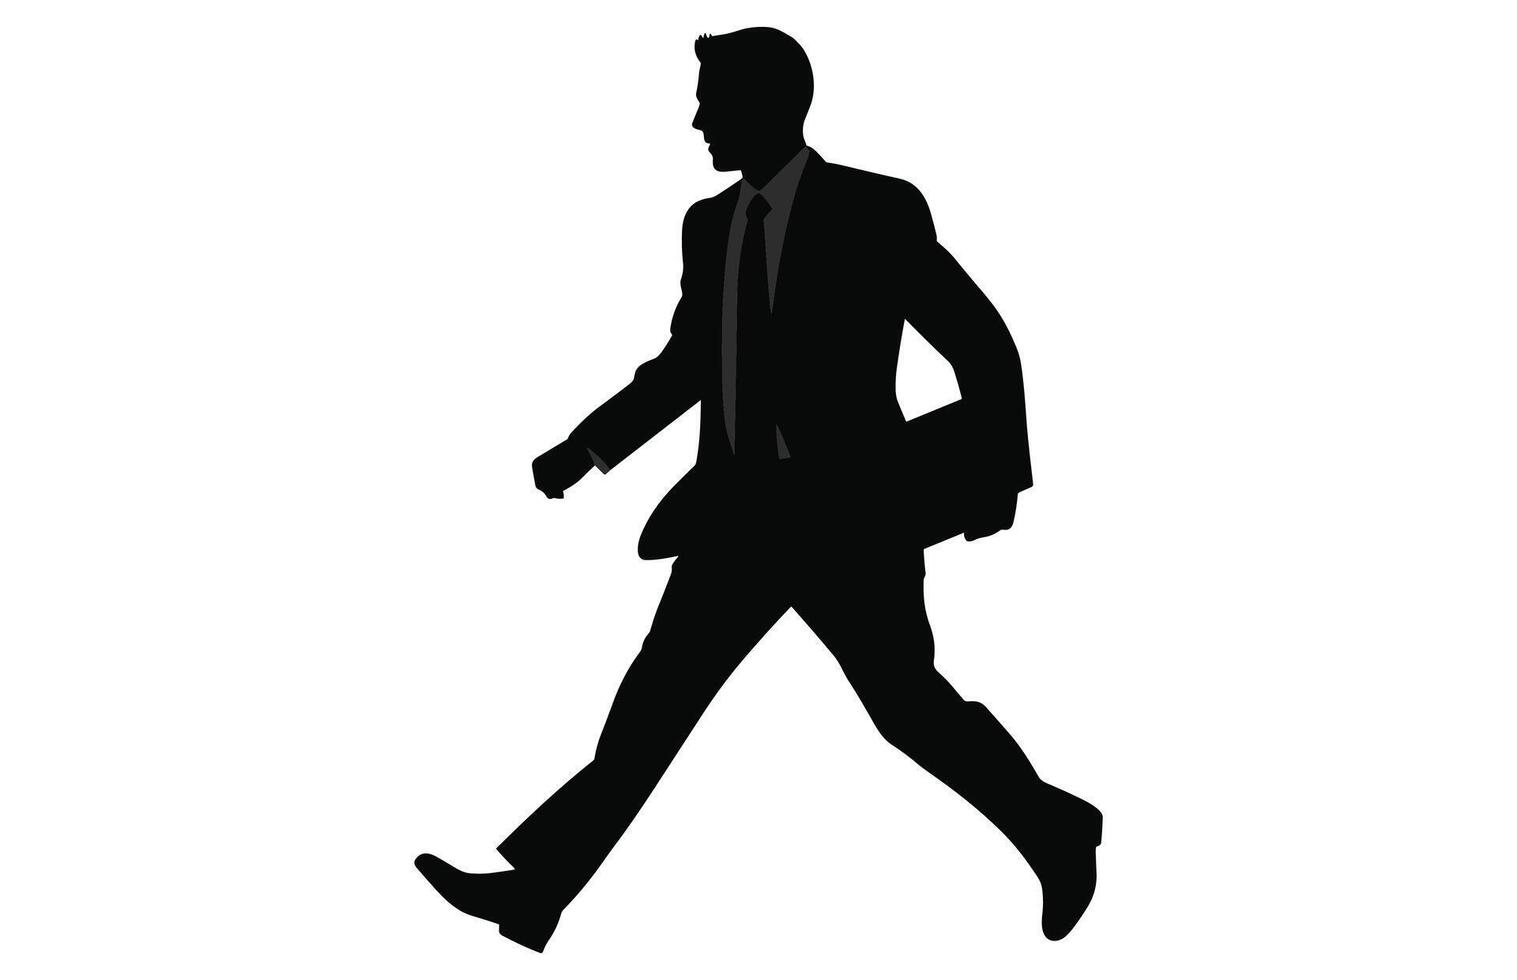 empresario caminando con un pequeño bolso silueta, silueta de trabajador o empresario en traje caminando con un pequeño bolso vector